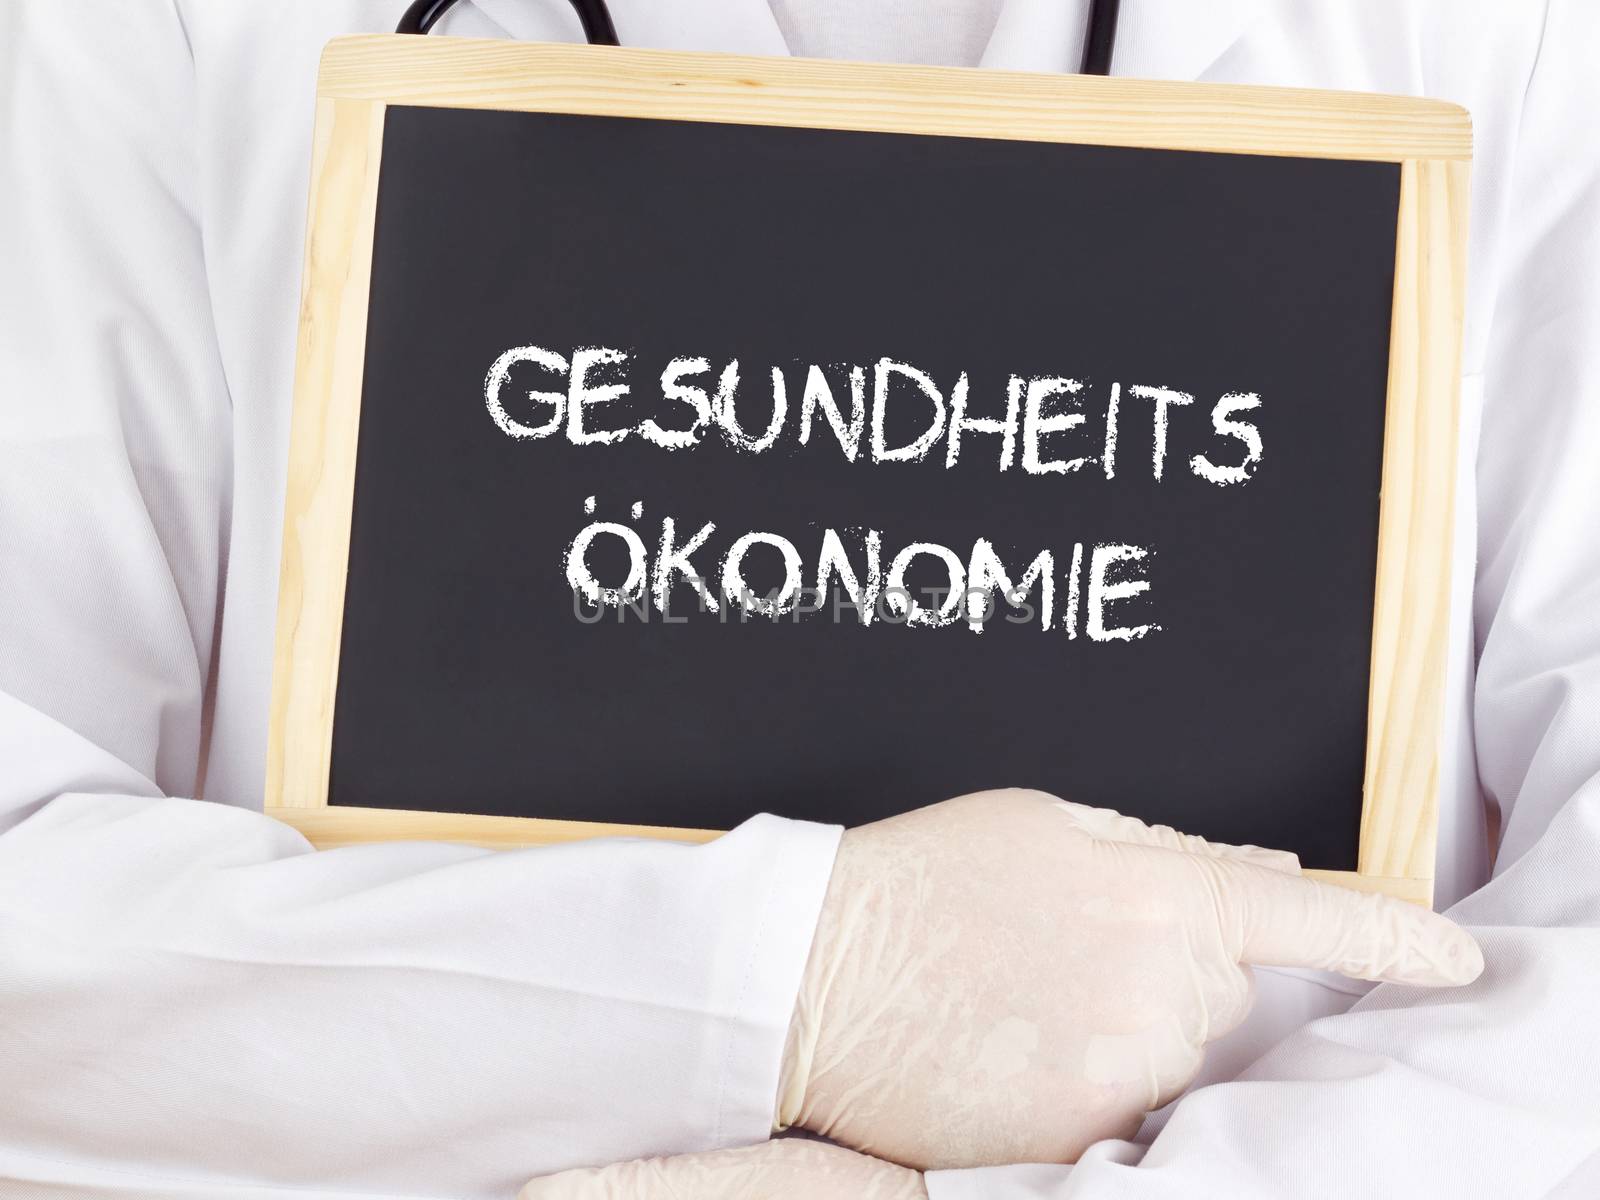 Doctor shows information: health economics in german